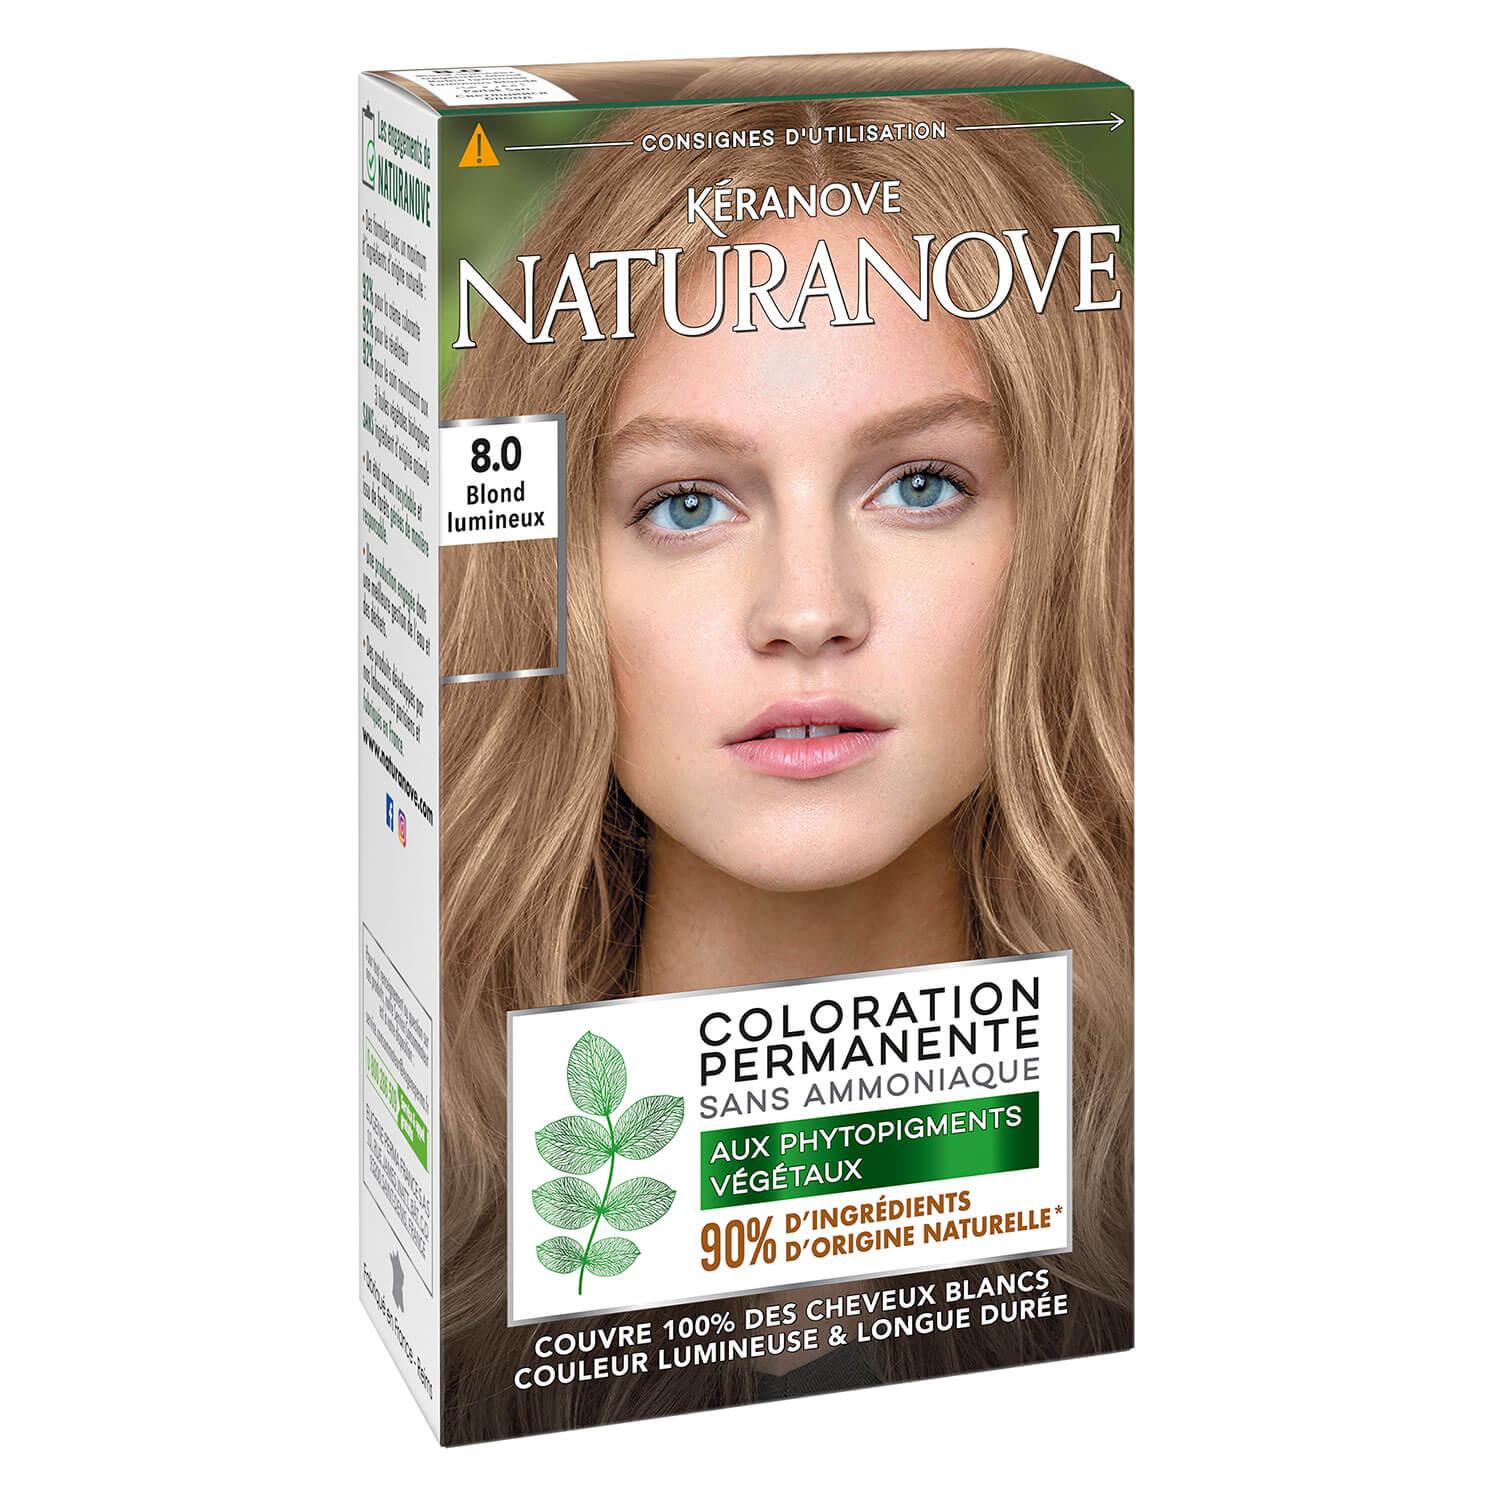 Naturanove - Coloration Permanente Blond Lumineux 8.0